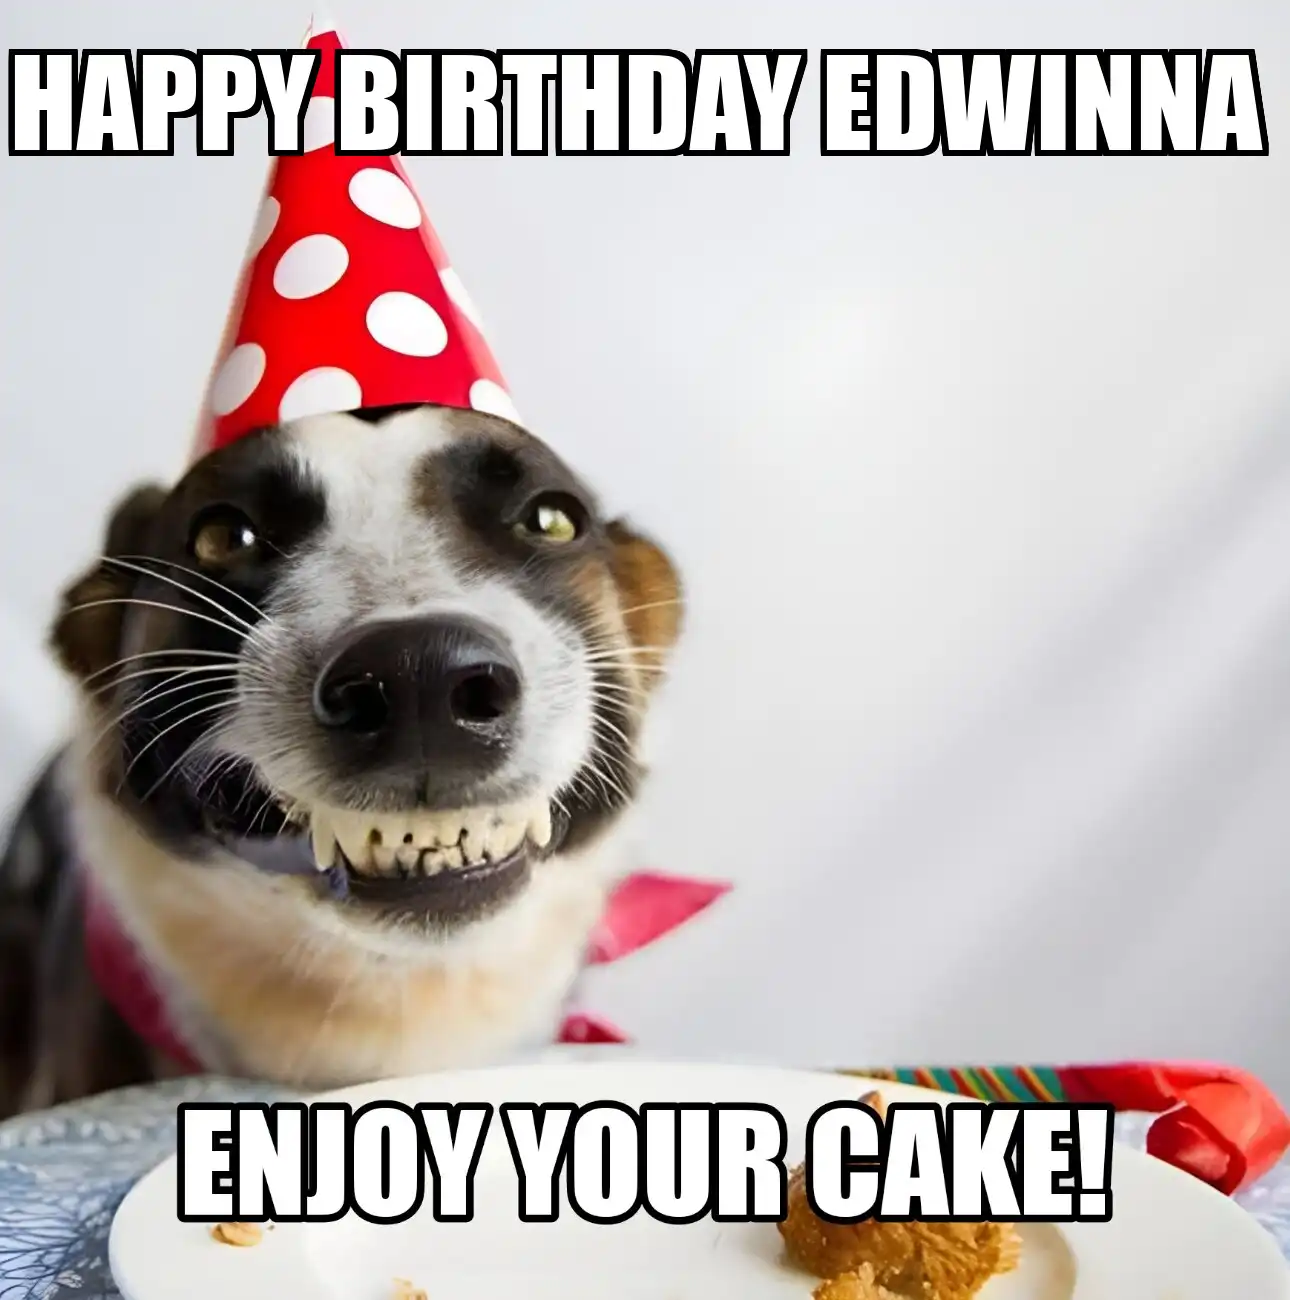 Happy Birthday Edwinna Enjoy Your Cake Dog Meme